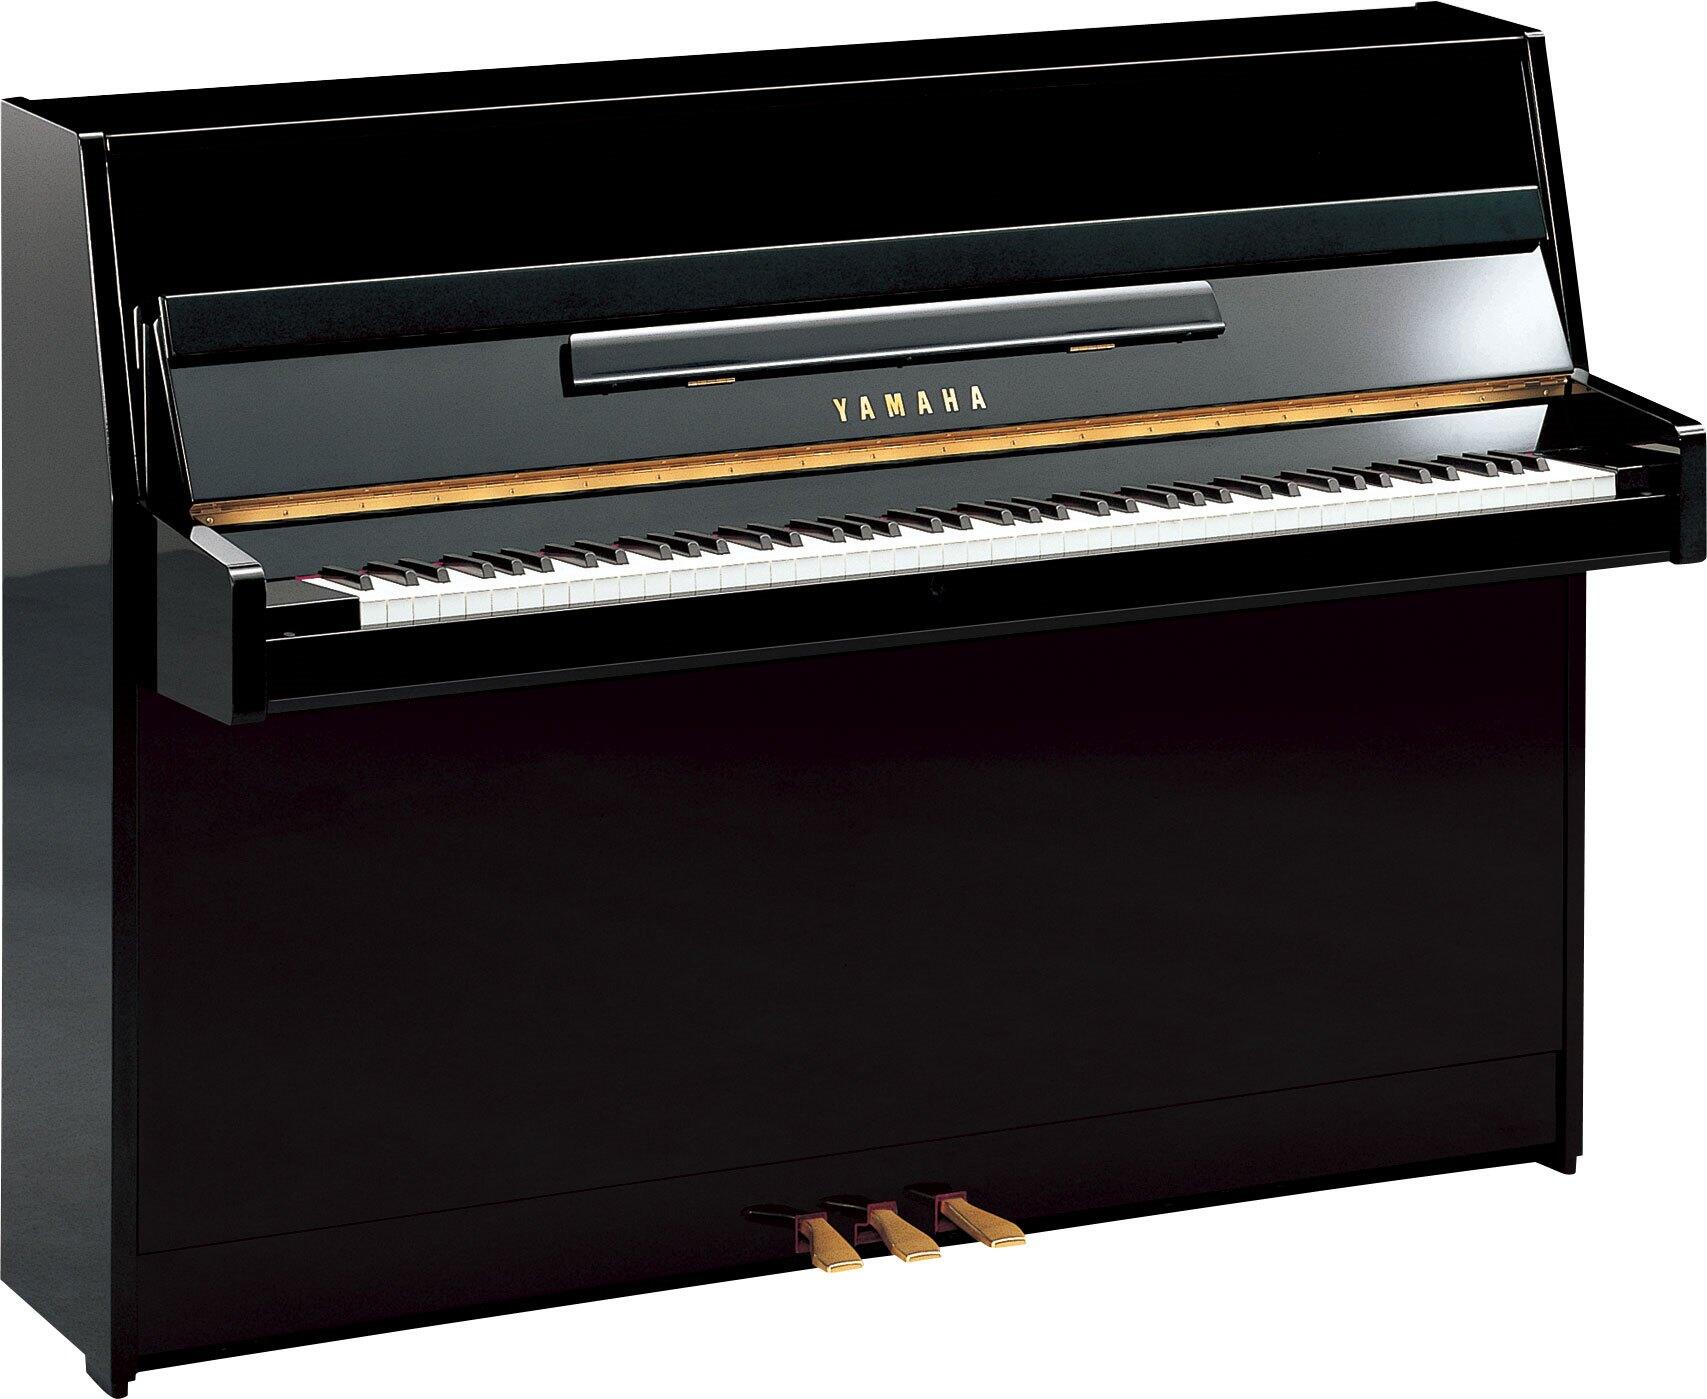 Yamaha Pianos Silent B1 SC3 PE Silent Noir poli-brillant 109 cm : photo 1